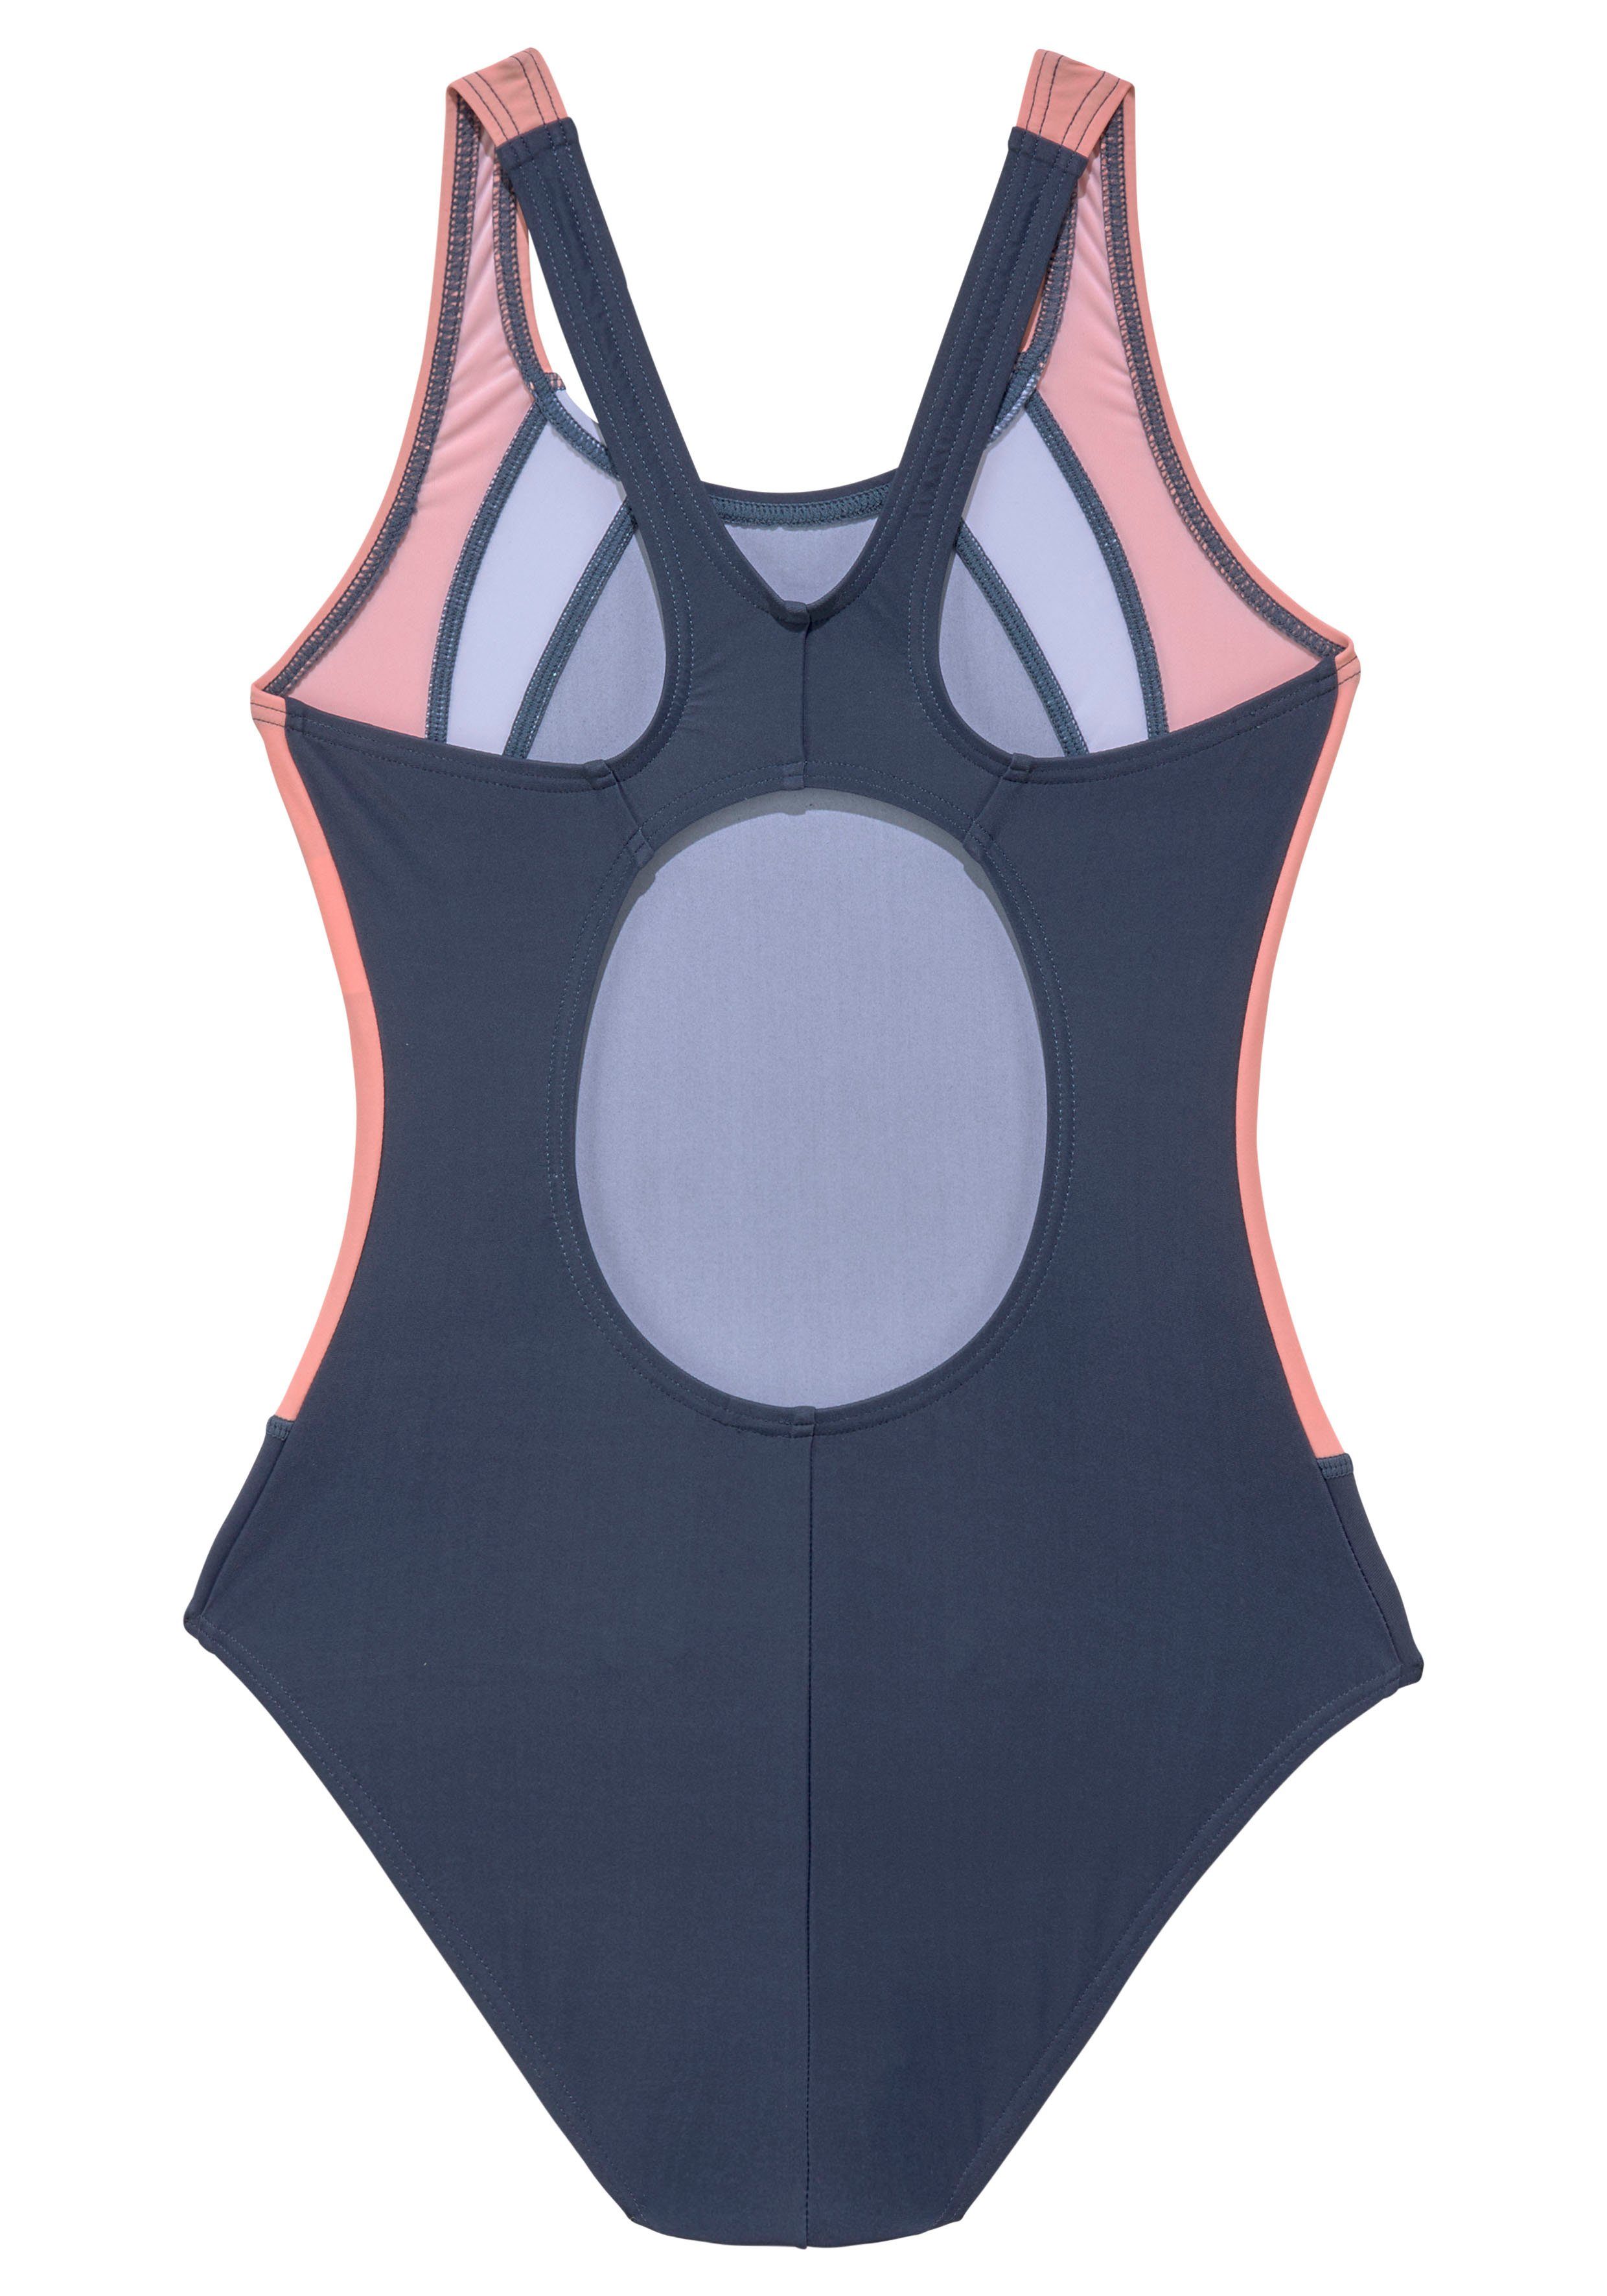 KangaROOS Badeanzug im sportlichen rauchblau-hummer Farbmix